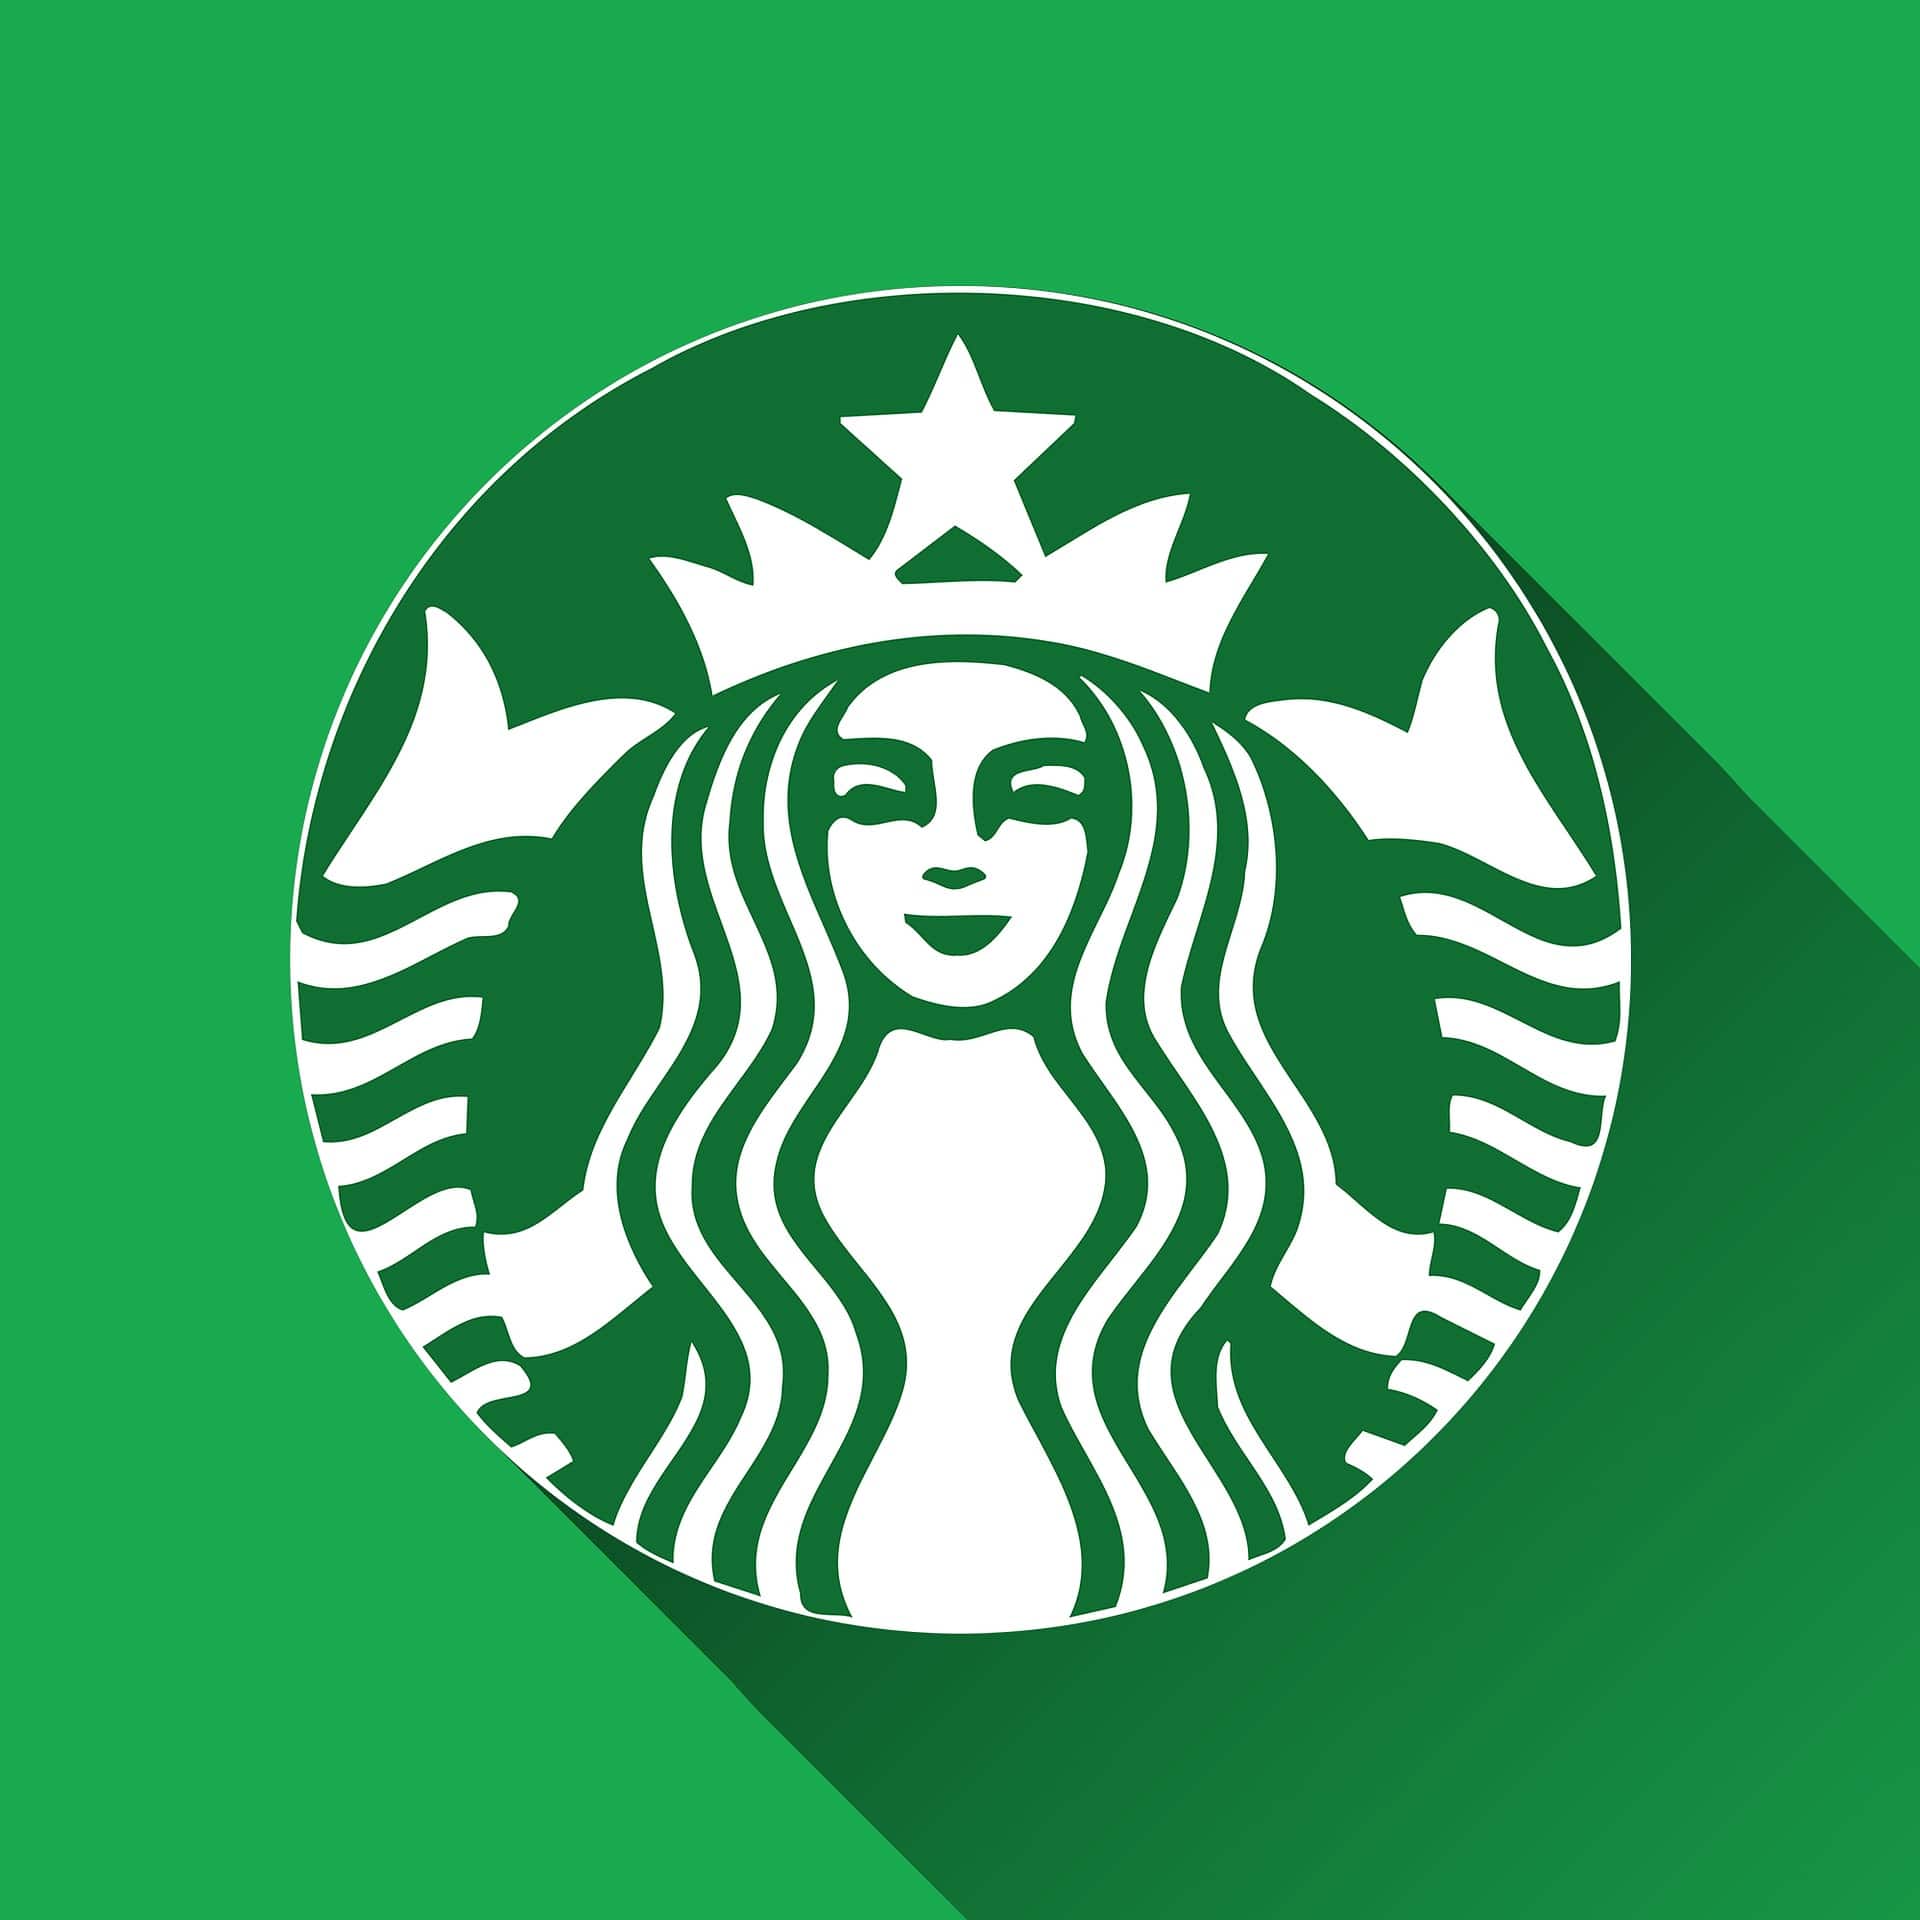 Starbucks Adding 4,000 AI-Enabled Coffee Machines 02/03/2020